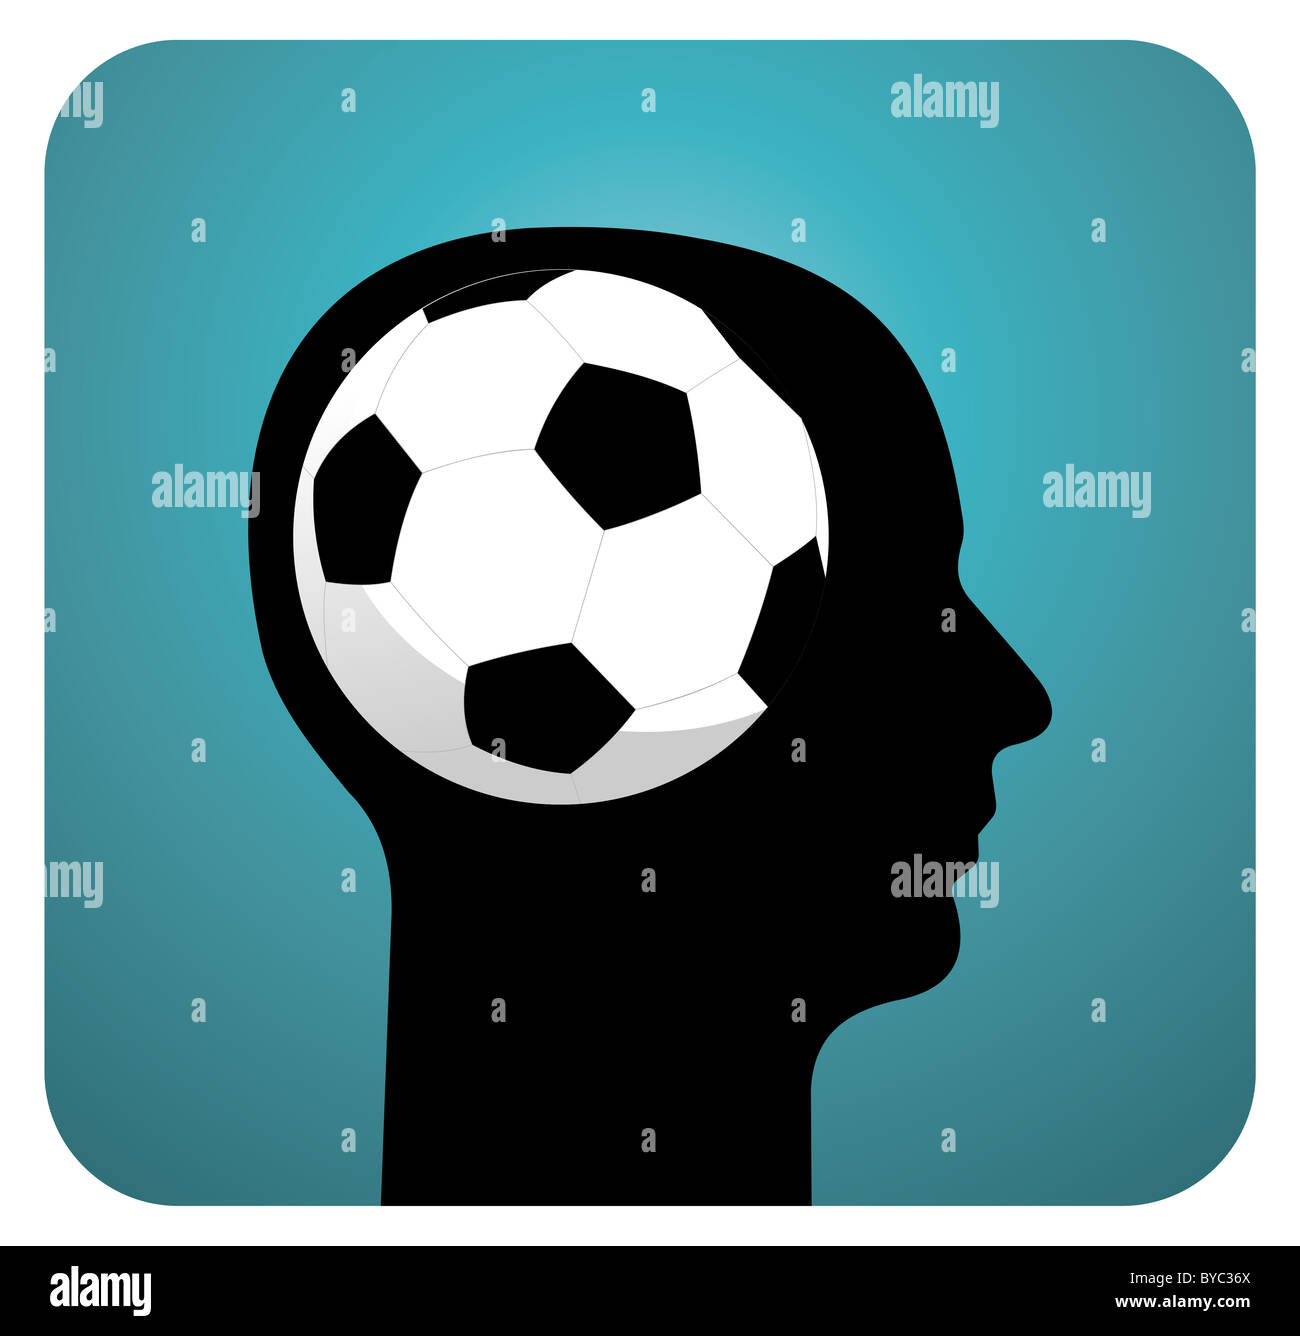 Голова мяч футбол. Футбольный мяч на голове. Футбольный мяч вместо головы. Футбольные головы. Футбол мяч головой.